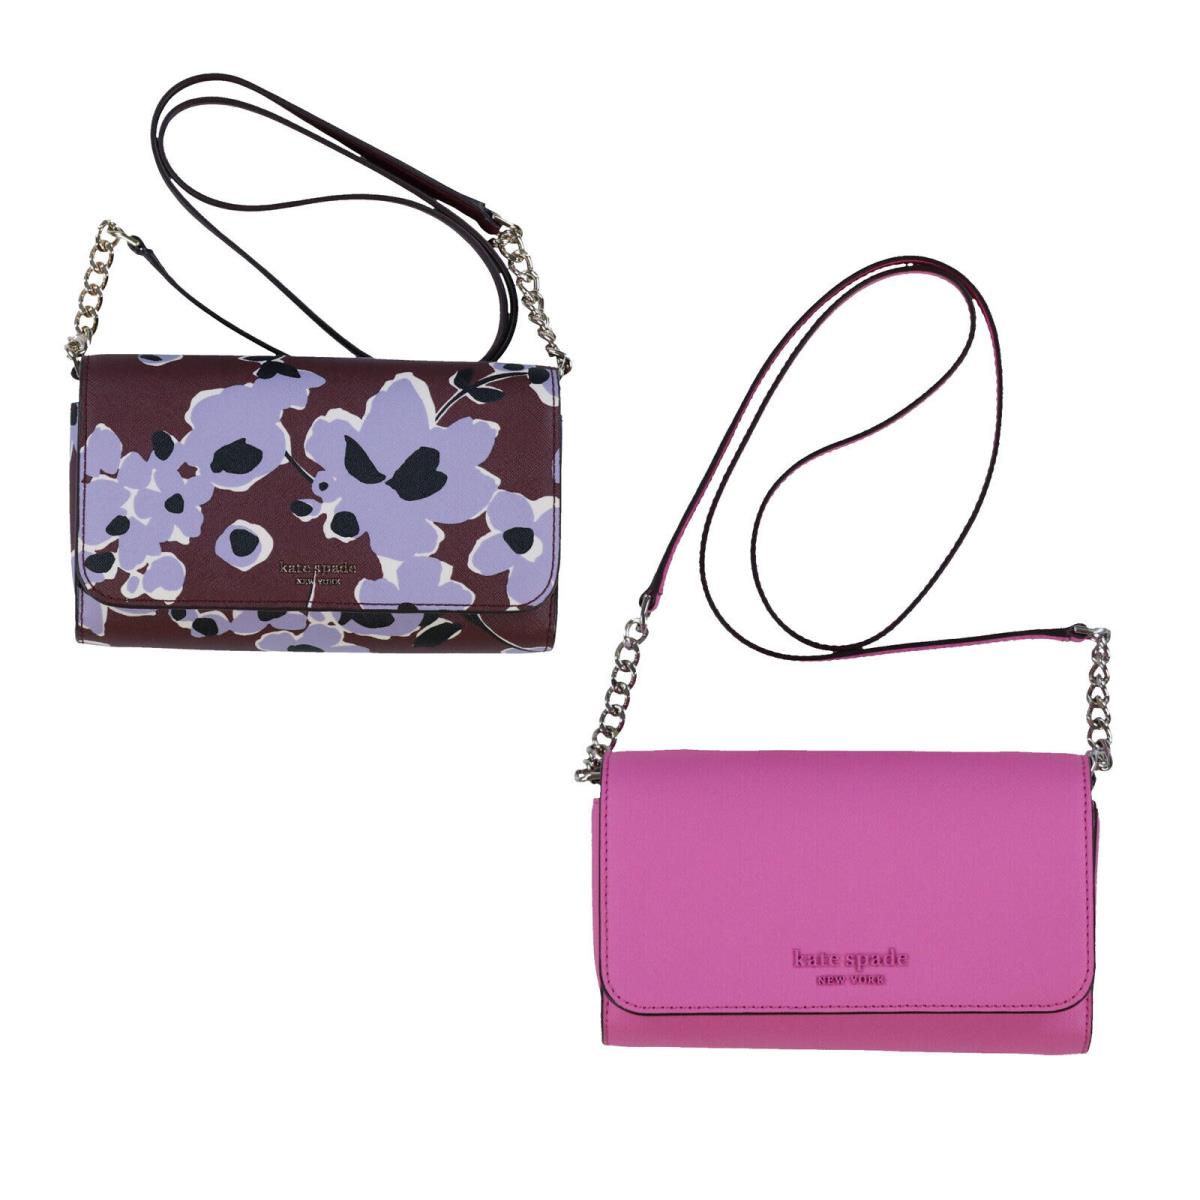 Kate Spade New York Cameron Crossbody Purse Bag Small Flap Leather Handbag New - Exterior: